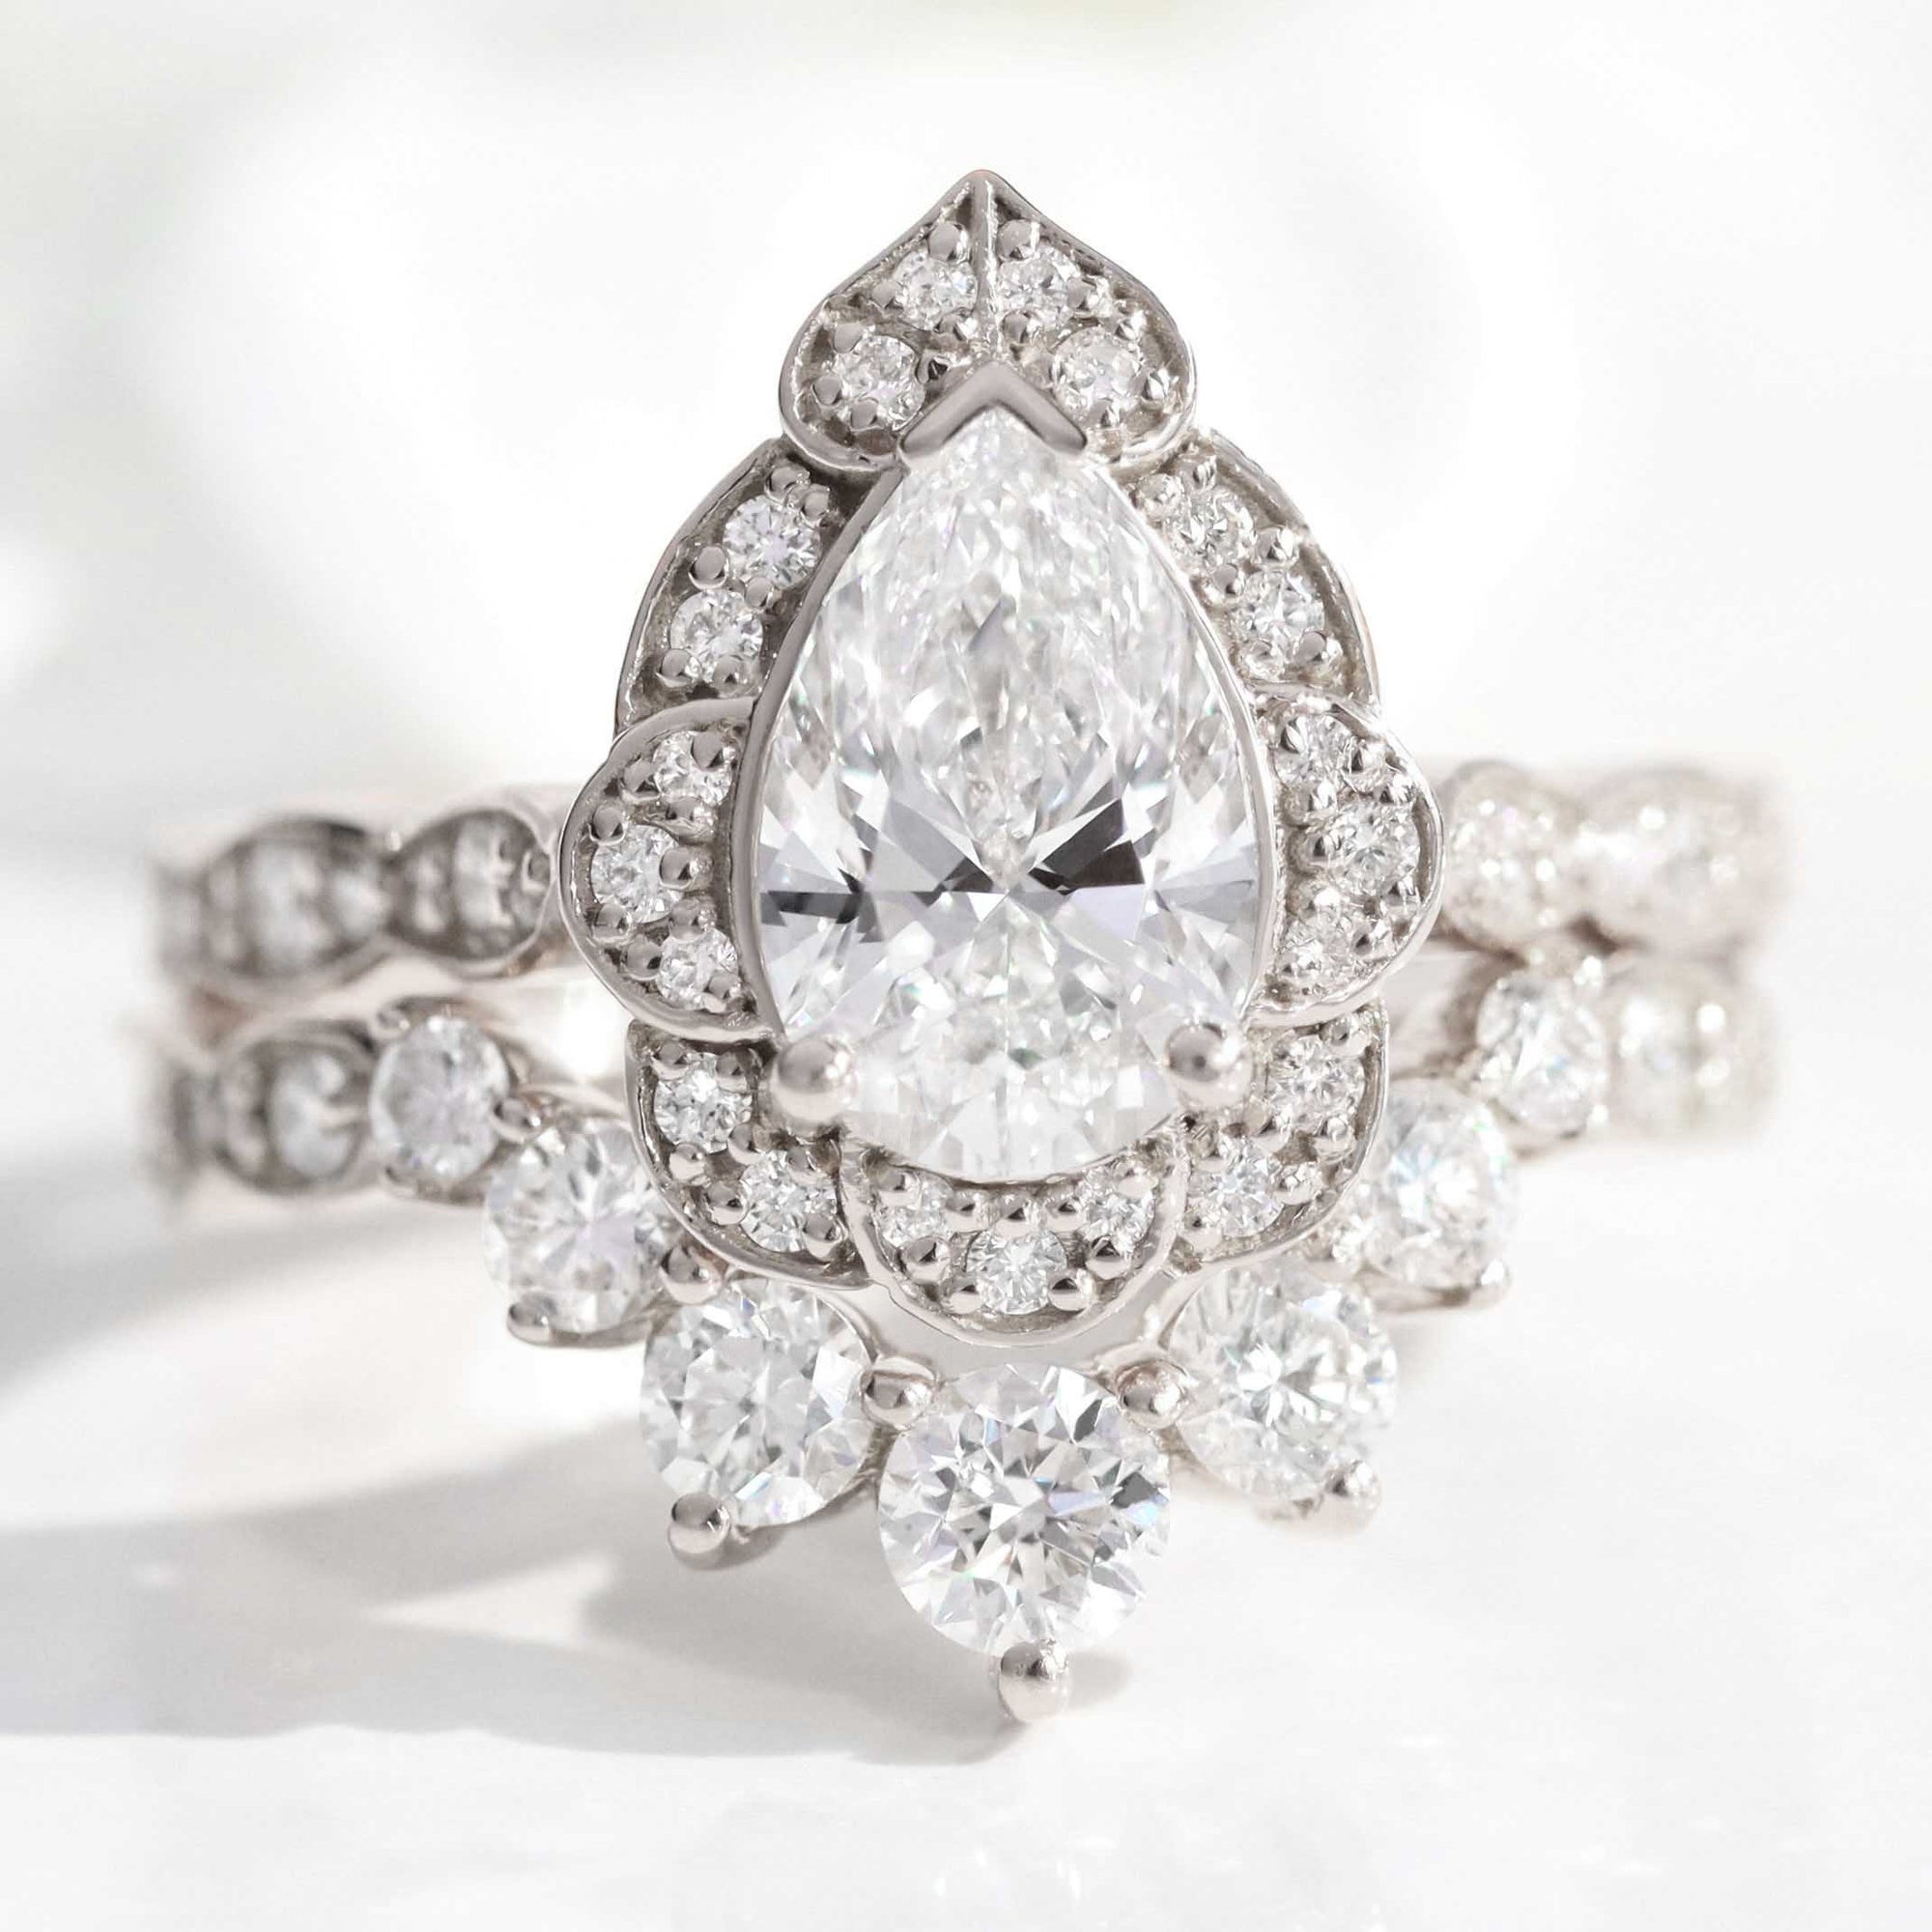 lab diamond ring stack white gold vintage halo pear diamond engagement ring set La More Design Jewelry